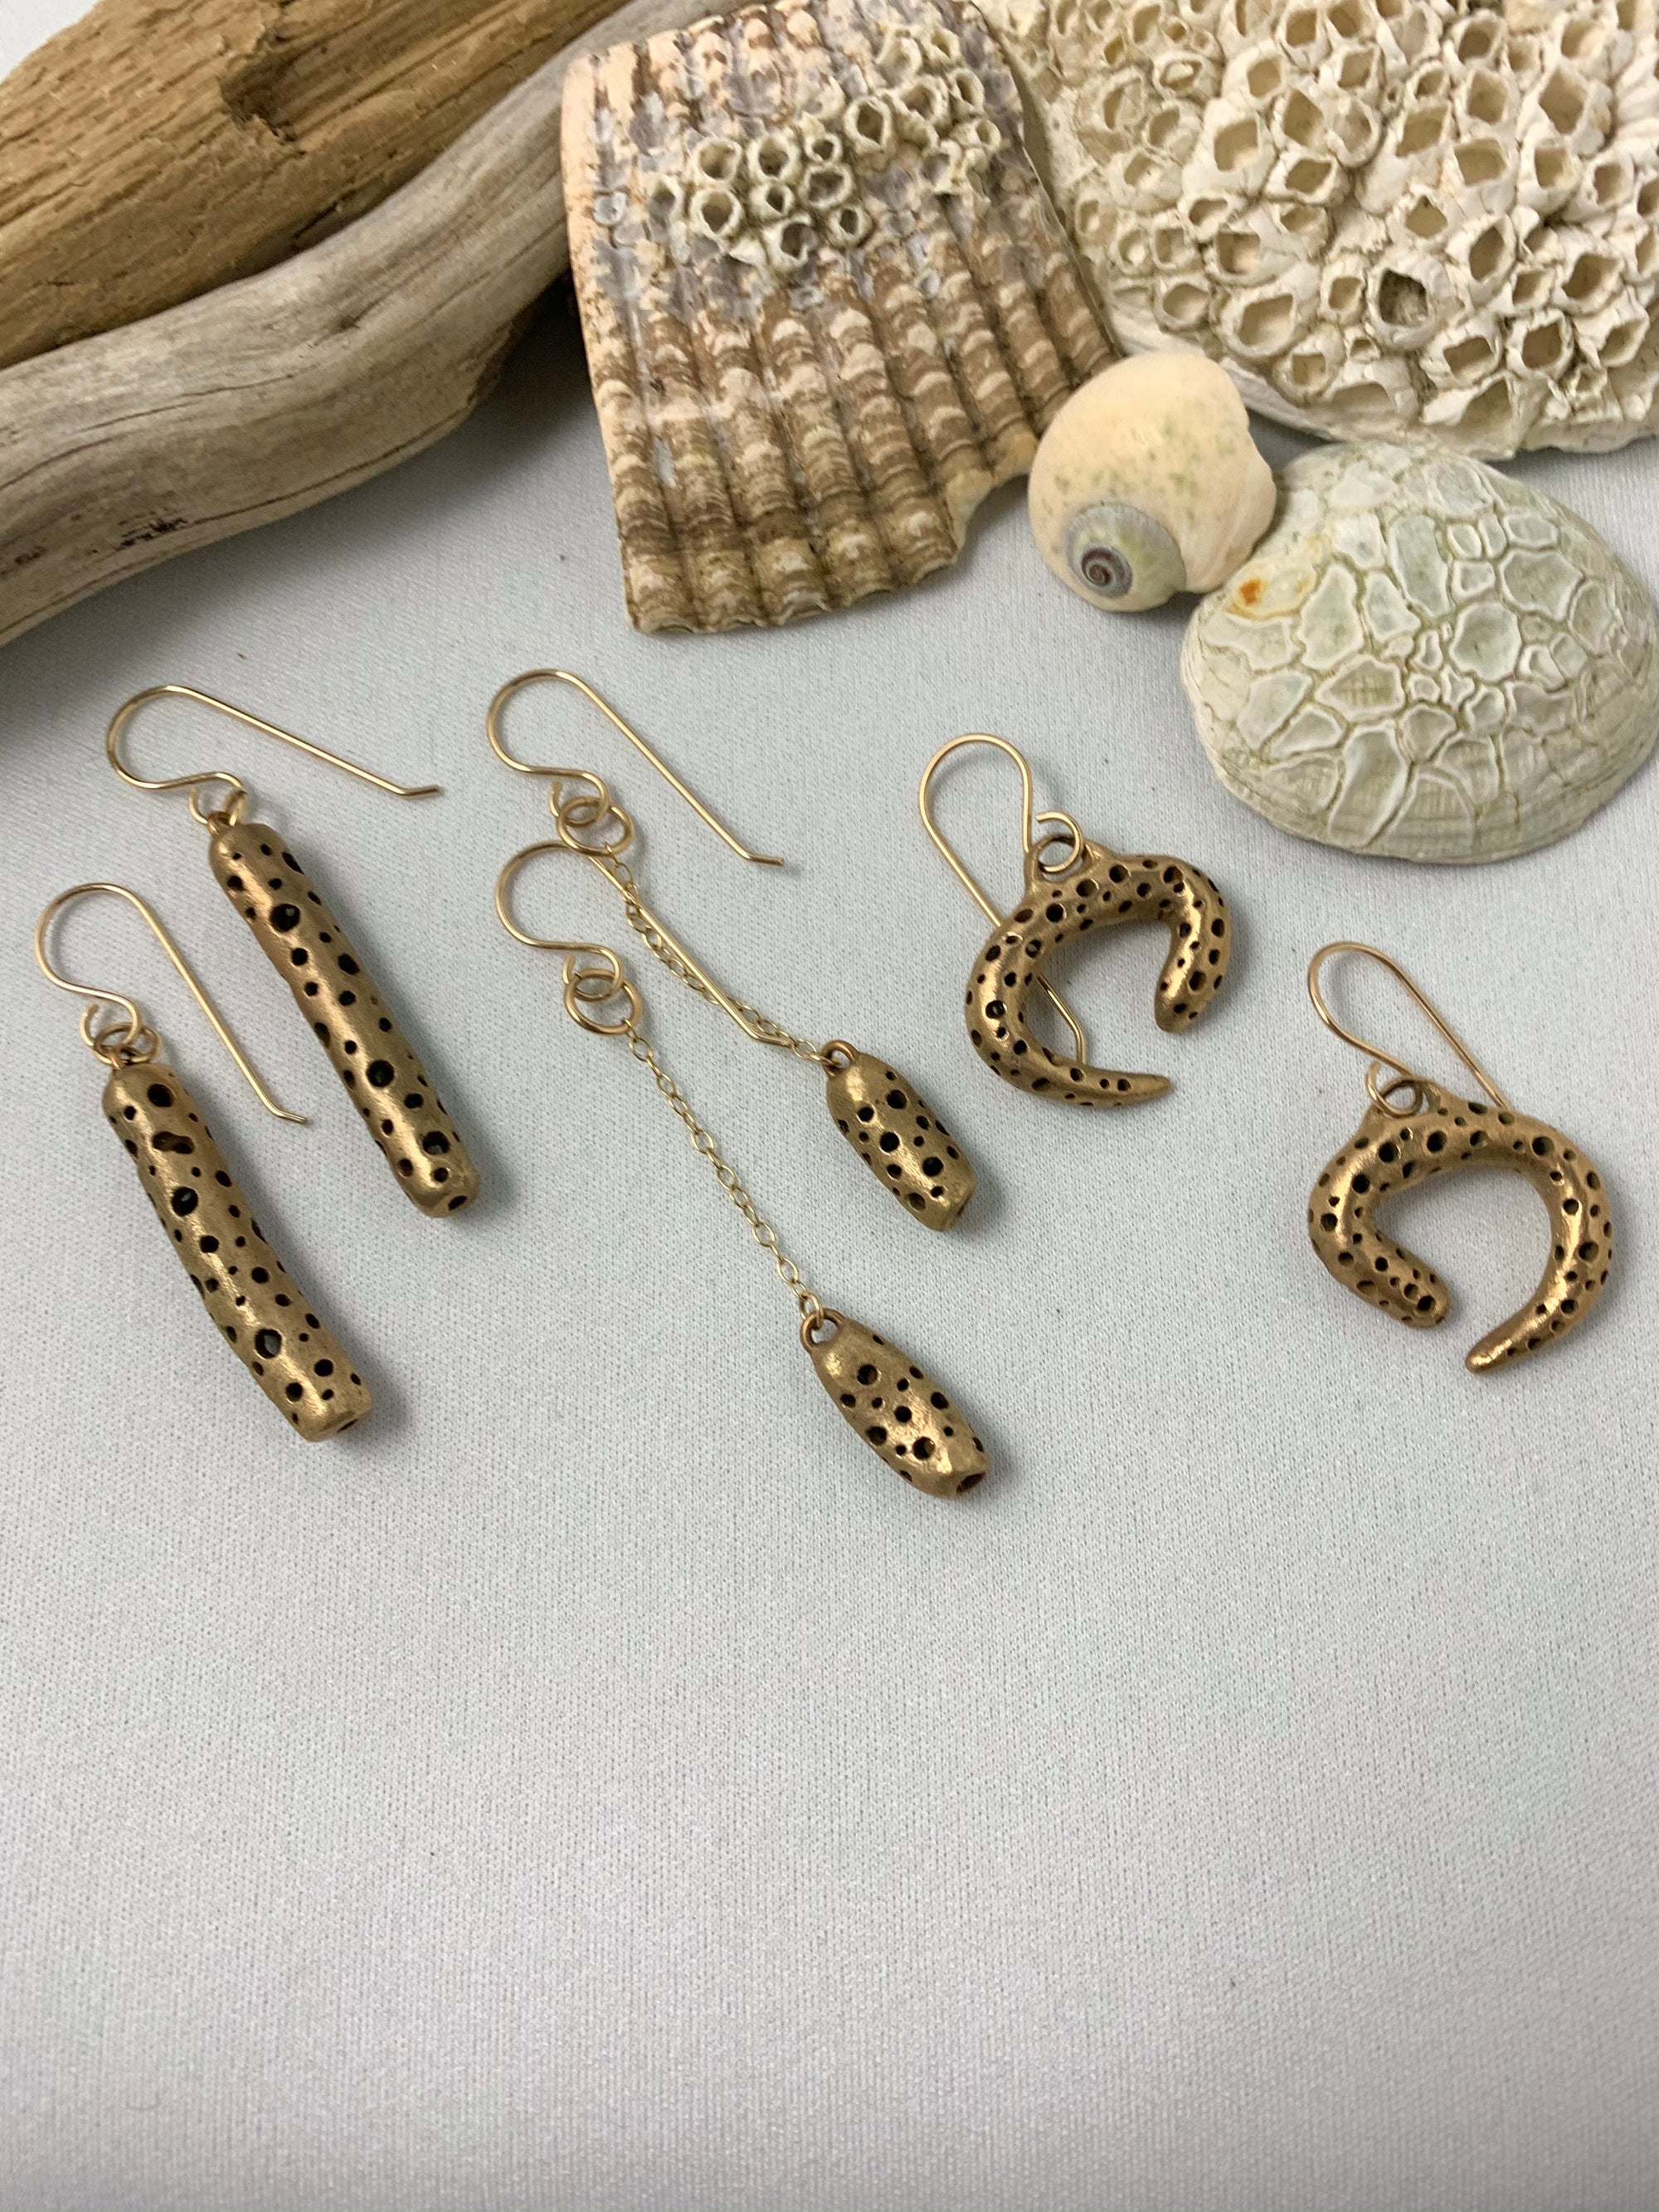 Three pairs of bronze handmade earrings with seashells